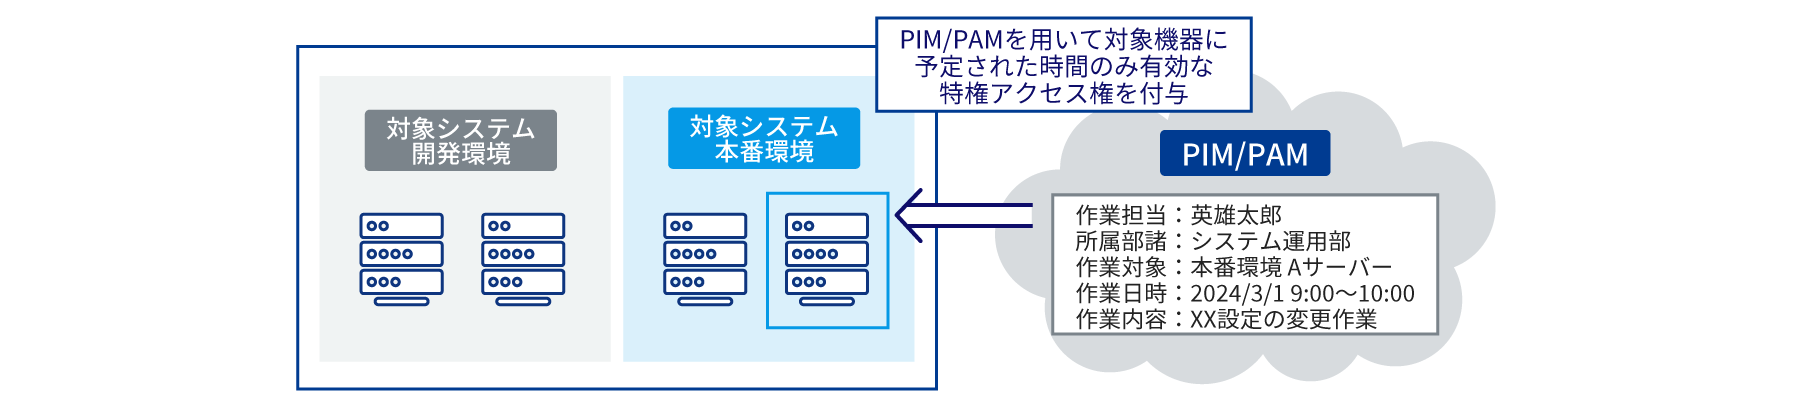 PIM/PAMを用いて対象機器に予定された時間のみ有効な特権アクセス権を付与